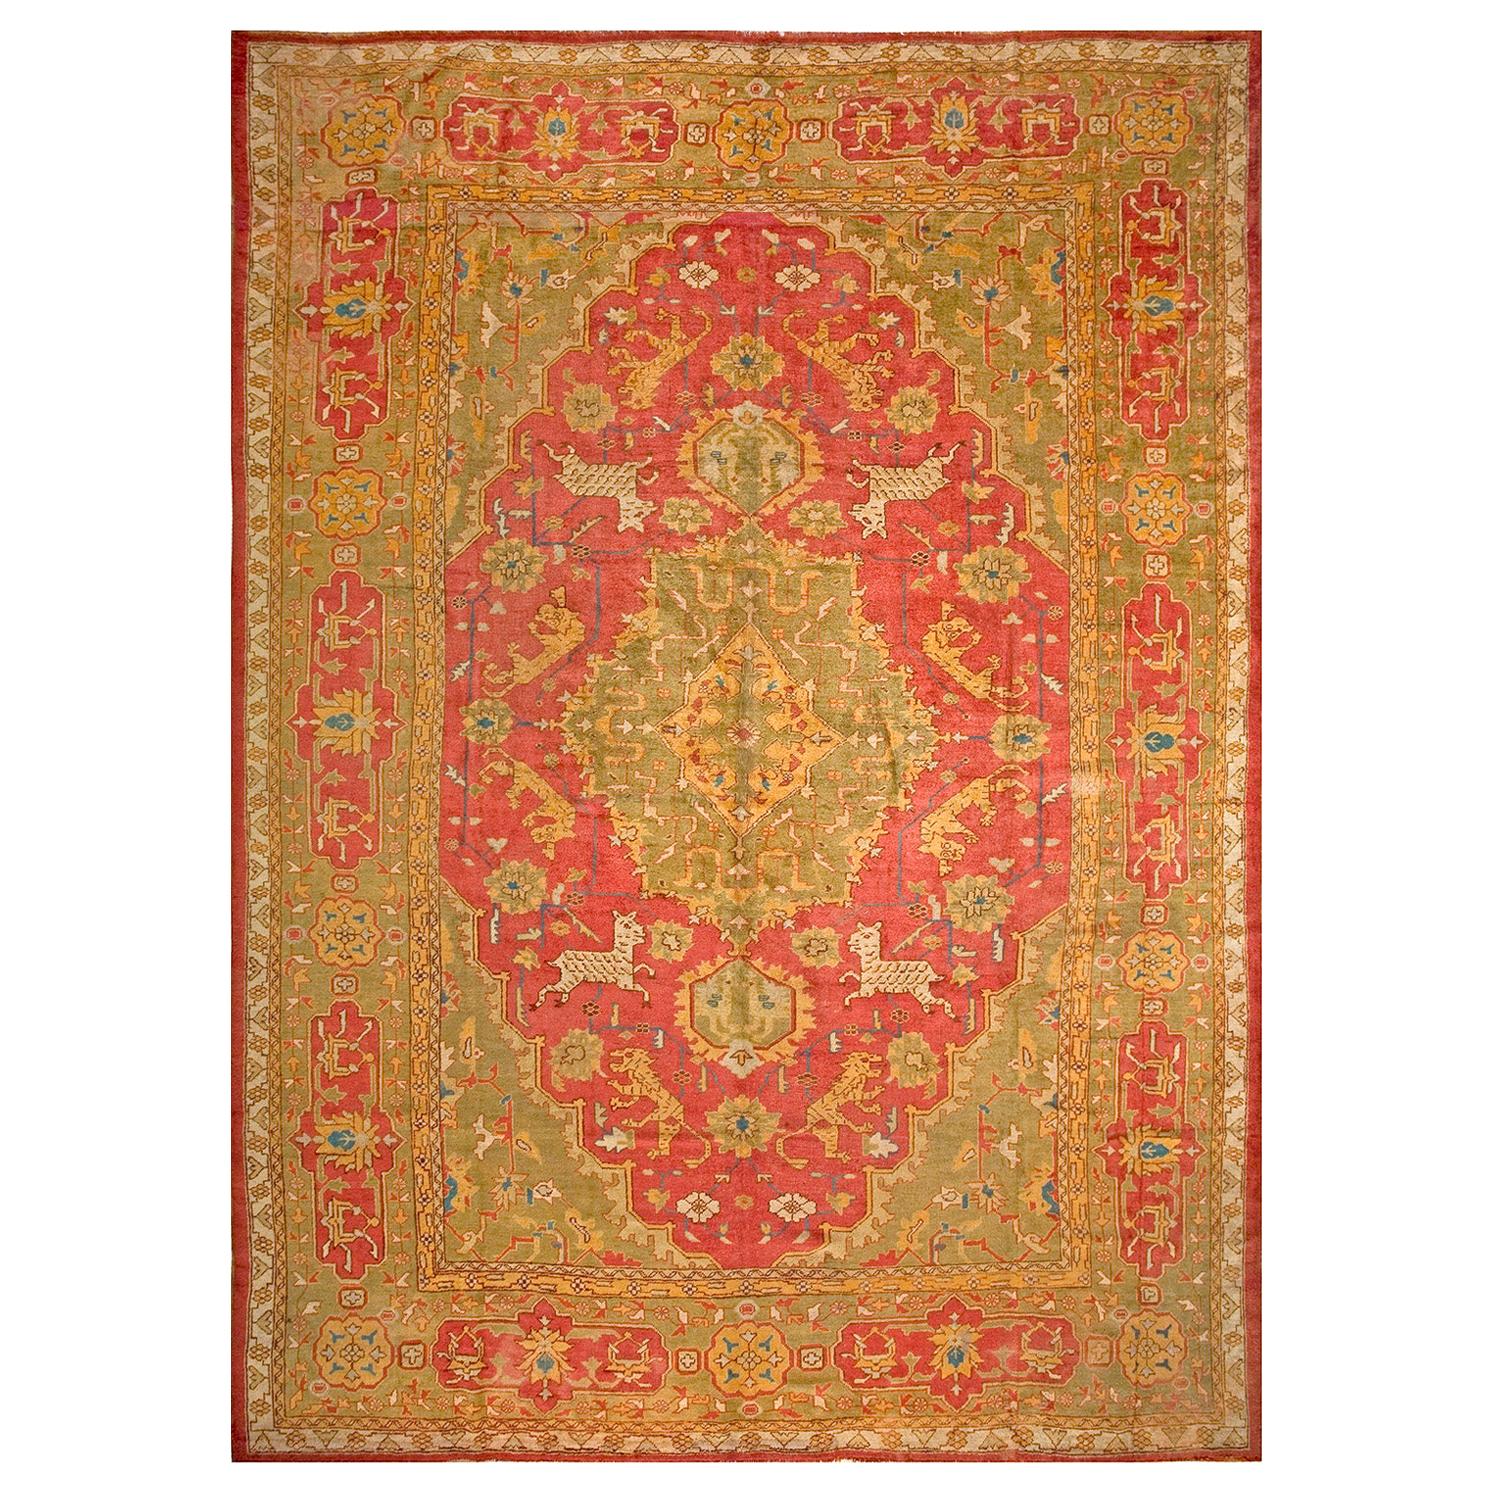 Late 19th Century Turkish Oushak Carpet ( 11'8" x 16'3" - 356 x 495 )